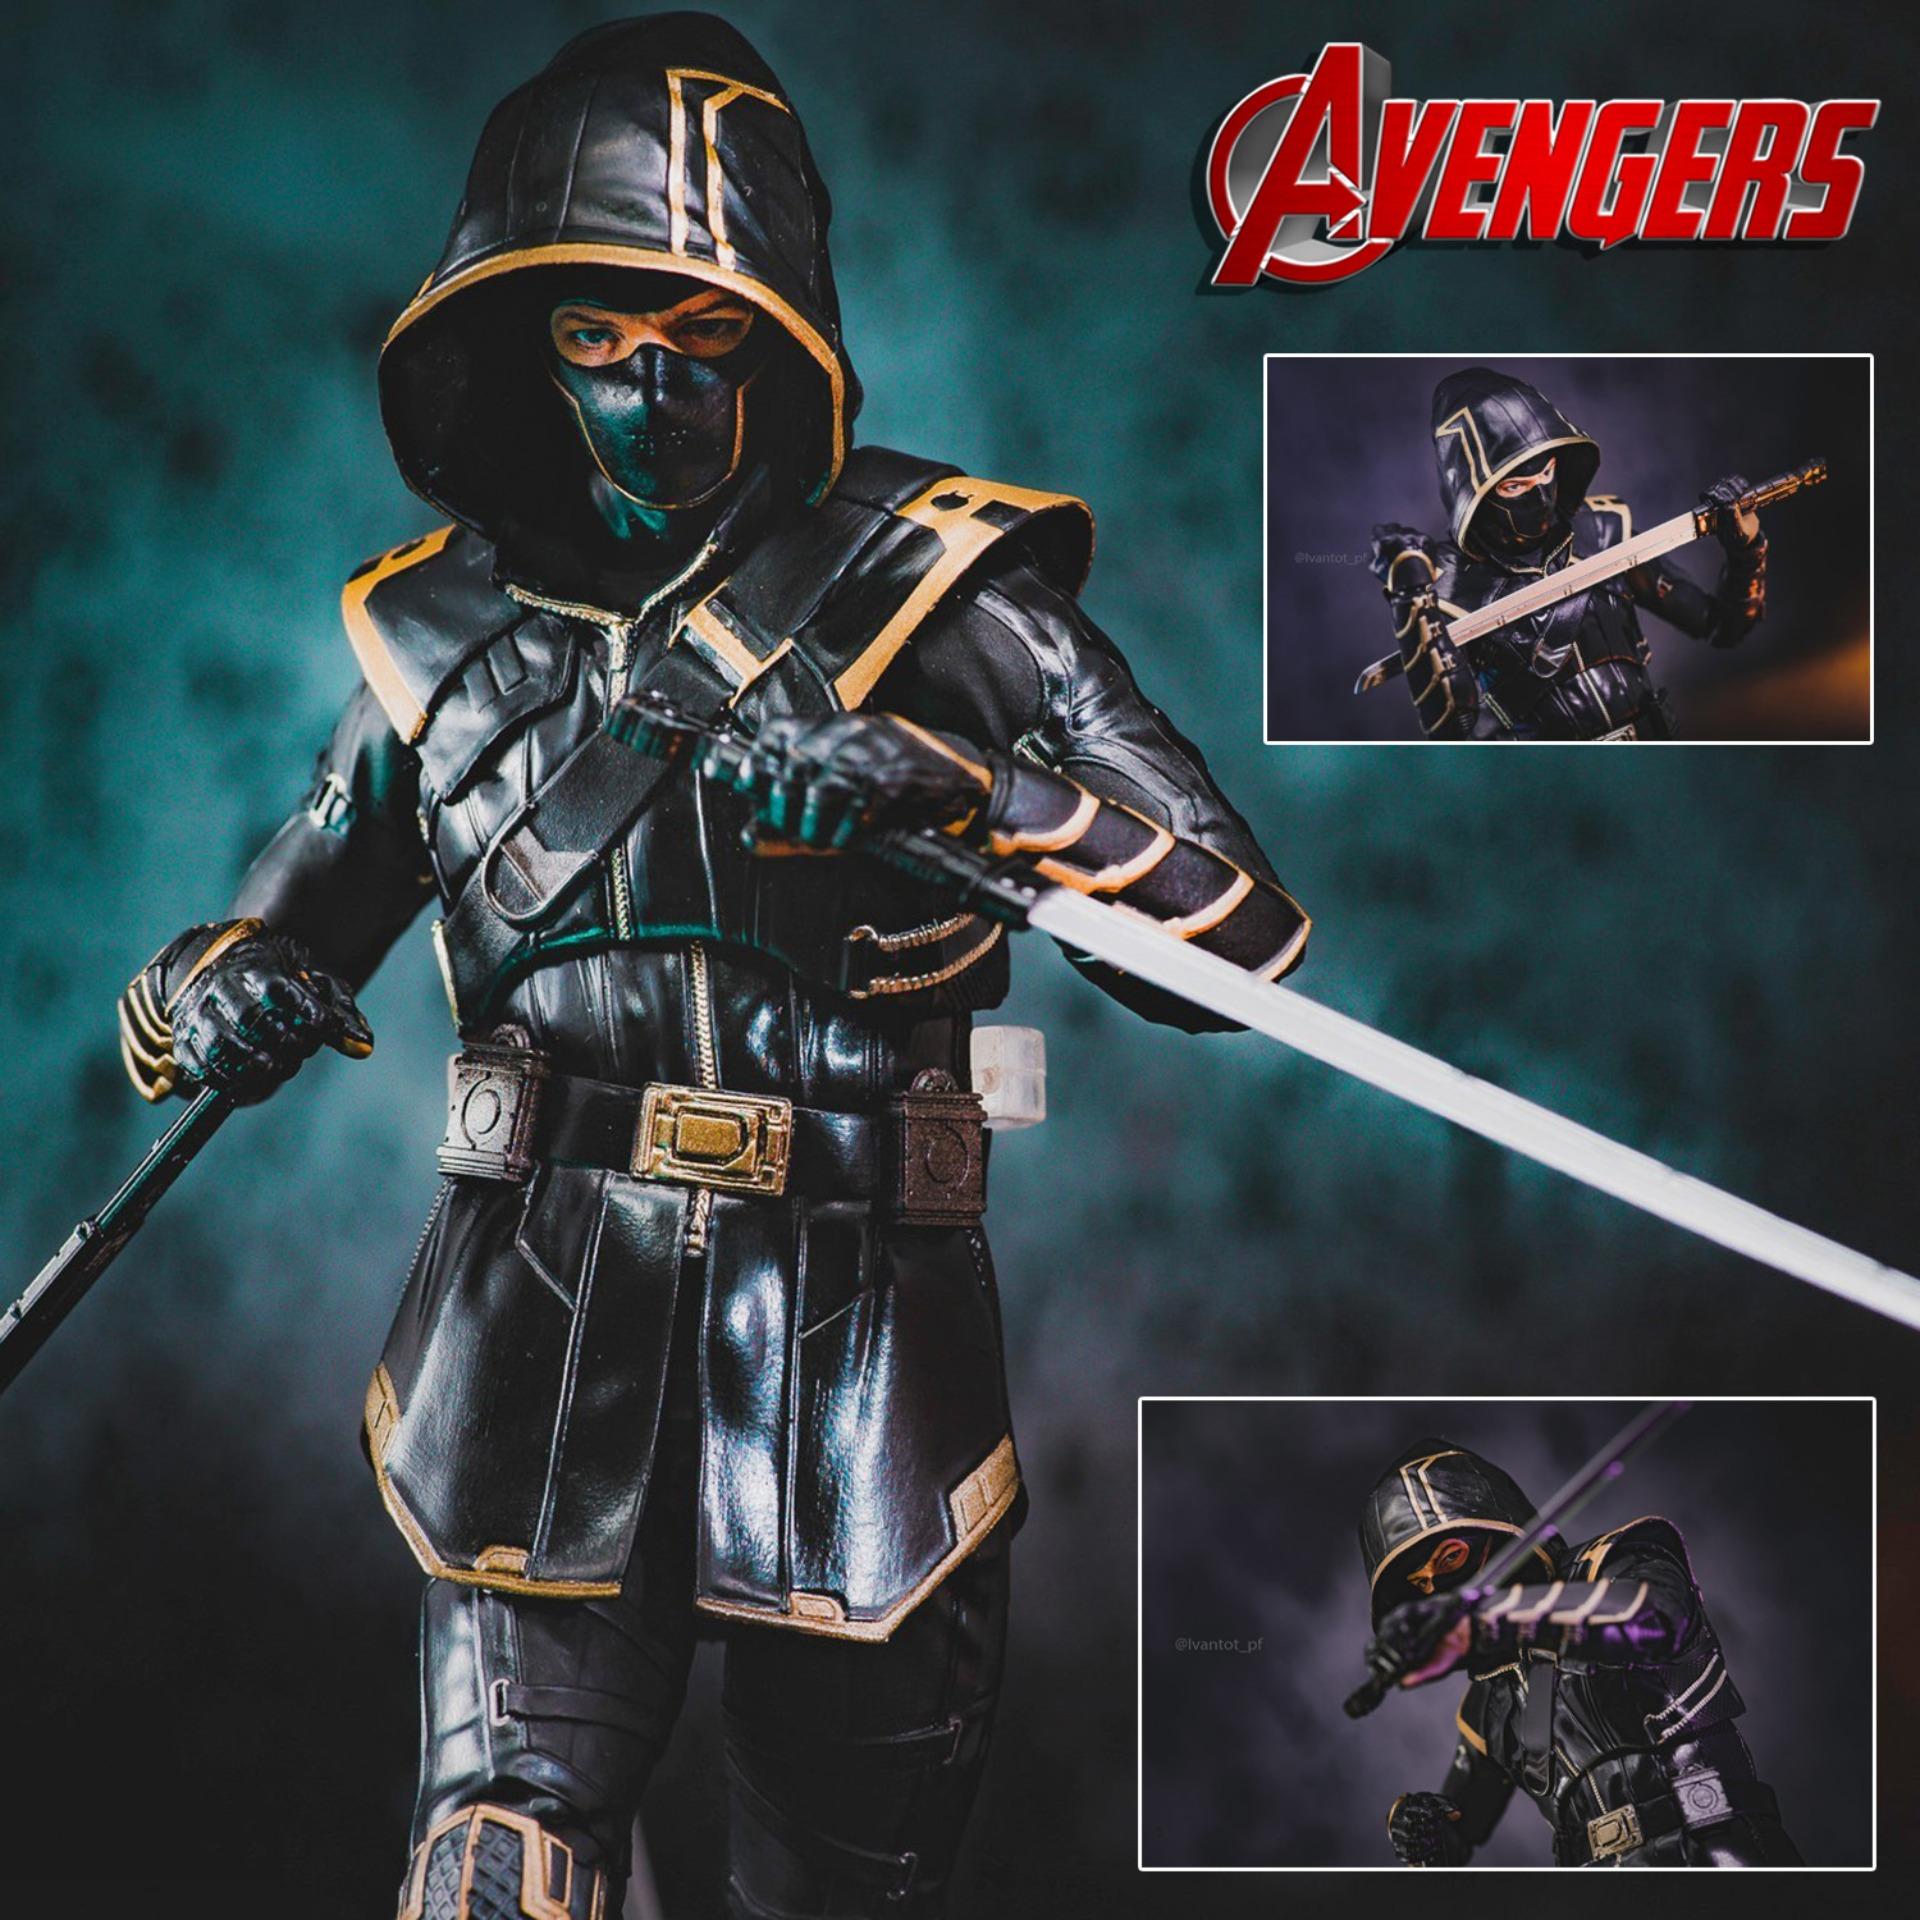 Model โมเดล งานแท้ 100�ndai S.H.Figuarts Marvel Universe มาร์เวล Avengers Endgame 2019 อเวนเจอร์ส เผด็จศึก Ronin โรนิน คลินท์ บาร์ตัน Jeremy Renner เจเรมี เรนเนอร์ Ver Figma ฟิกม่า Anime ขยับแขน-ขาได้ อนิเมะ การ์ตูน มังงะ Doll ตุ๊กตา manga